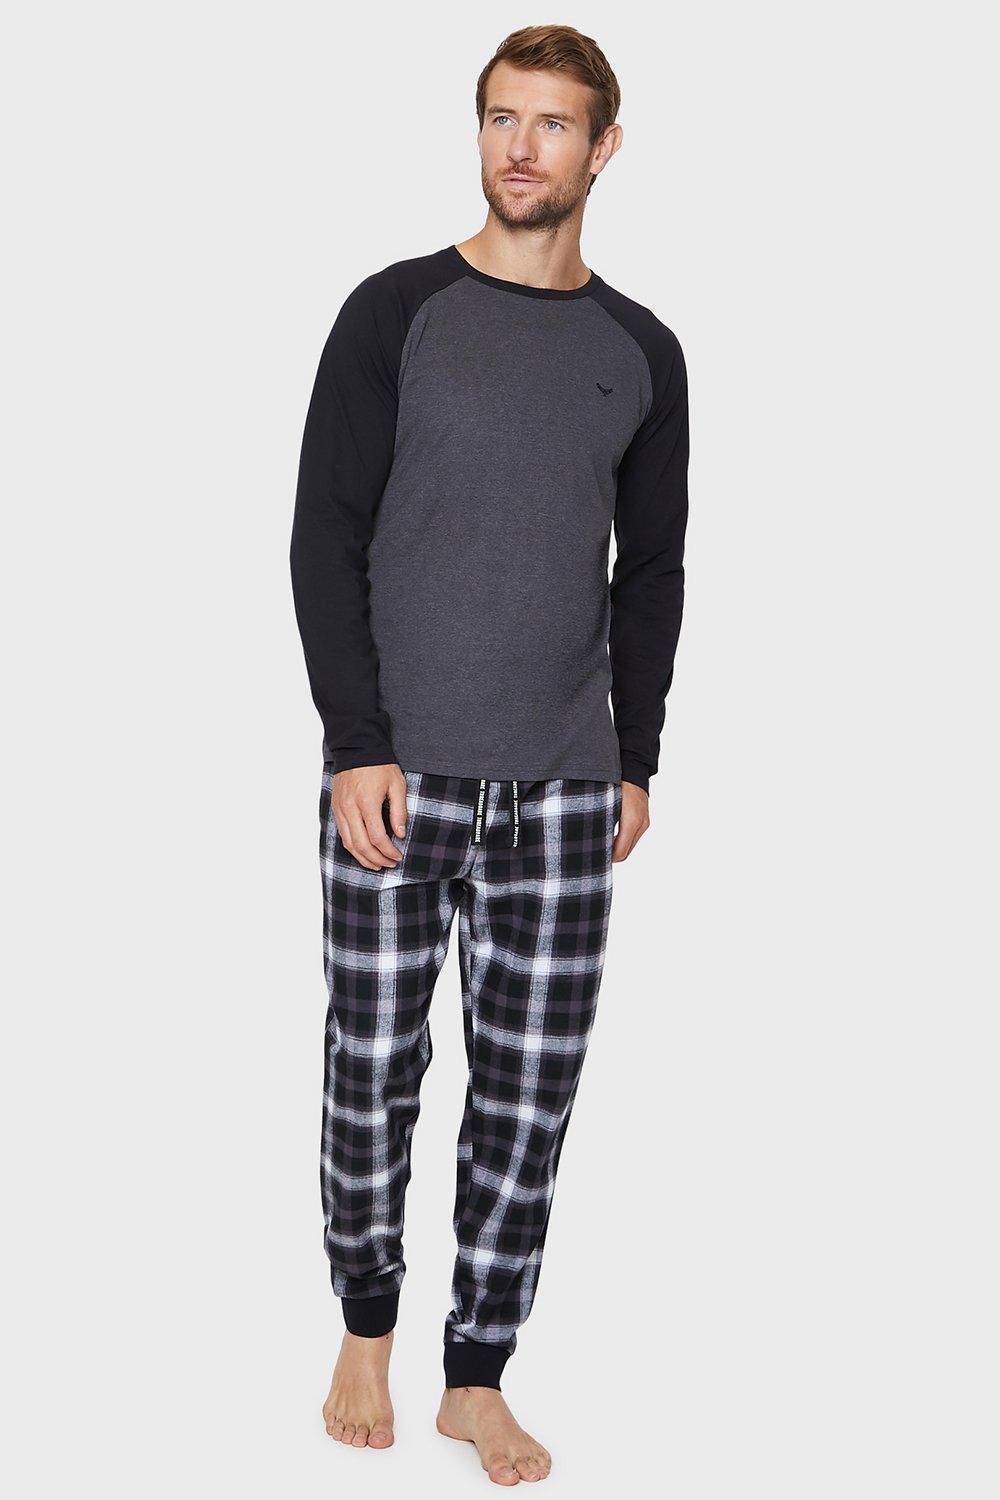 'Hamilton' Cotton Blend Check Pyjama Set